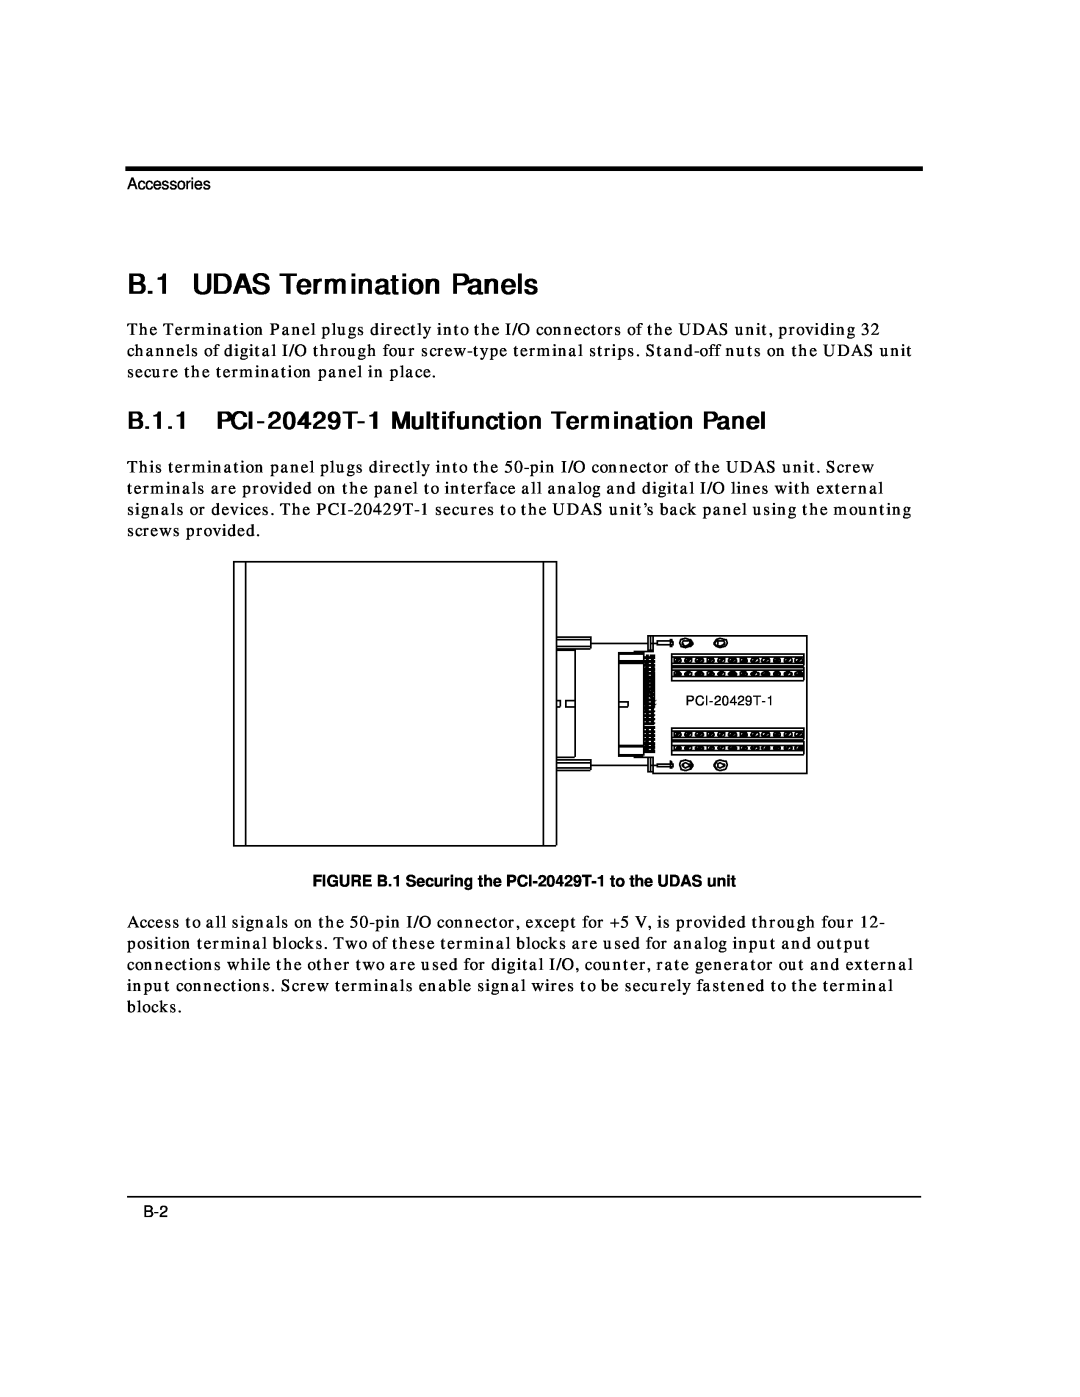 Intelligent Motion Systems UDAS-1001E B.1 UDAS Termination Panels, B.1.1 PCI-20429T-1 Multifunction Termination Panel 